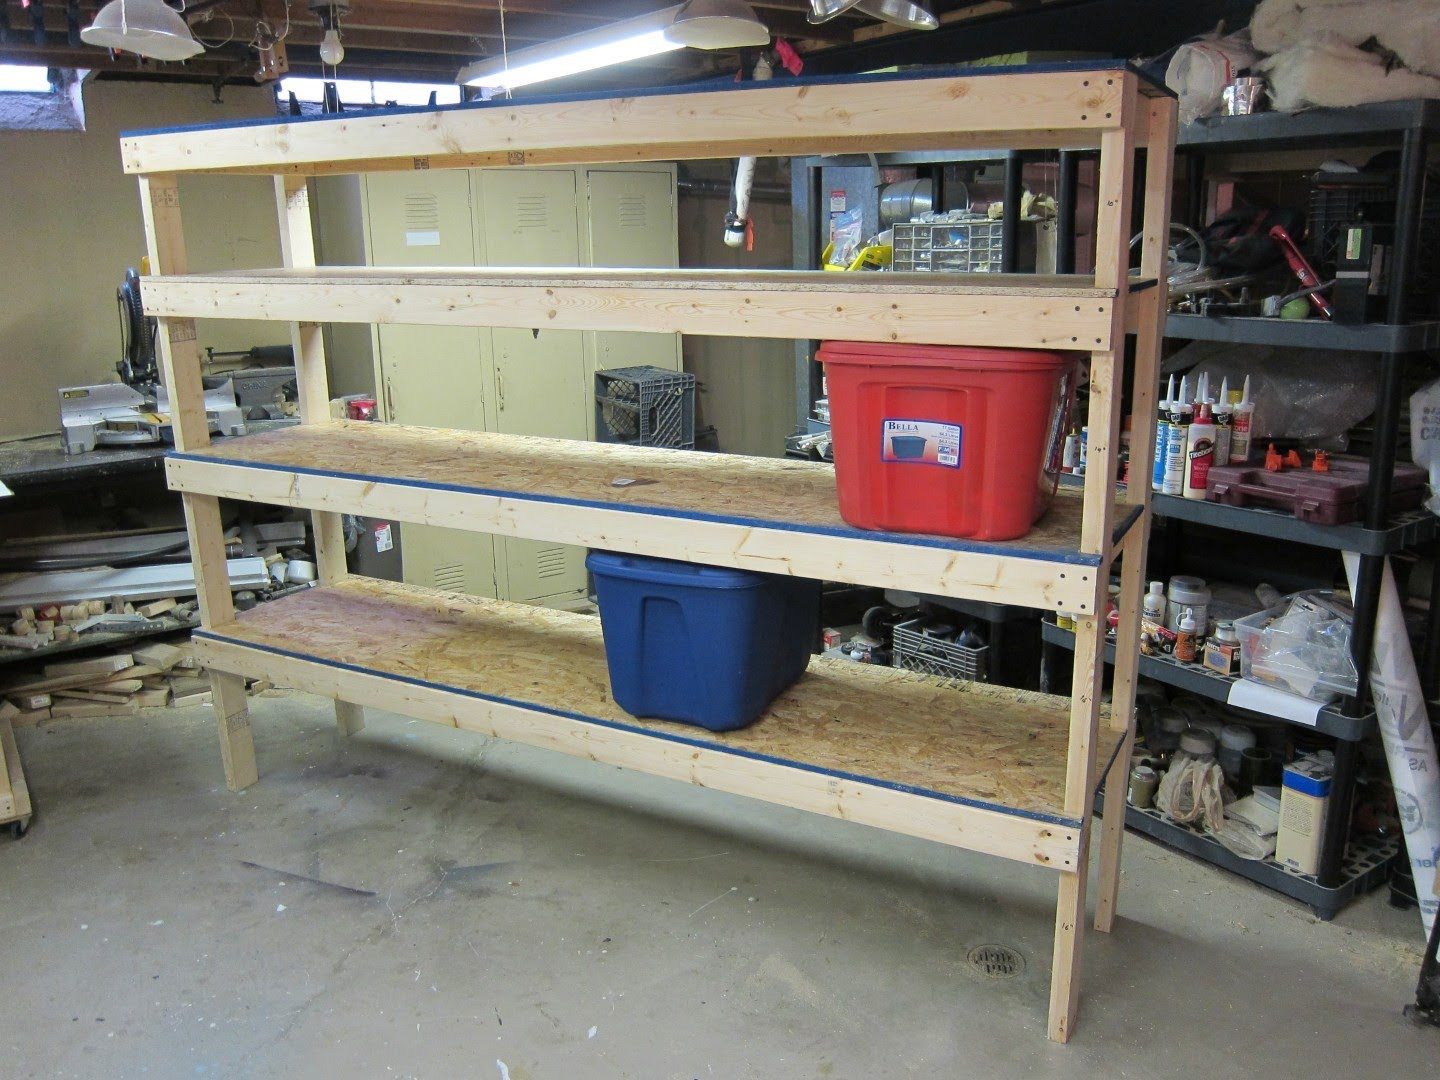 Best ideas about DIY Garage Shelves
. Save or Pin 20 DIY Garage Shelving Ideas Now.